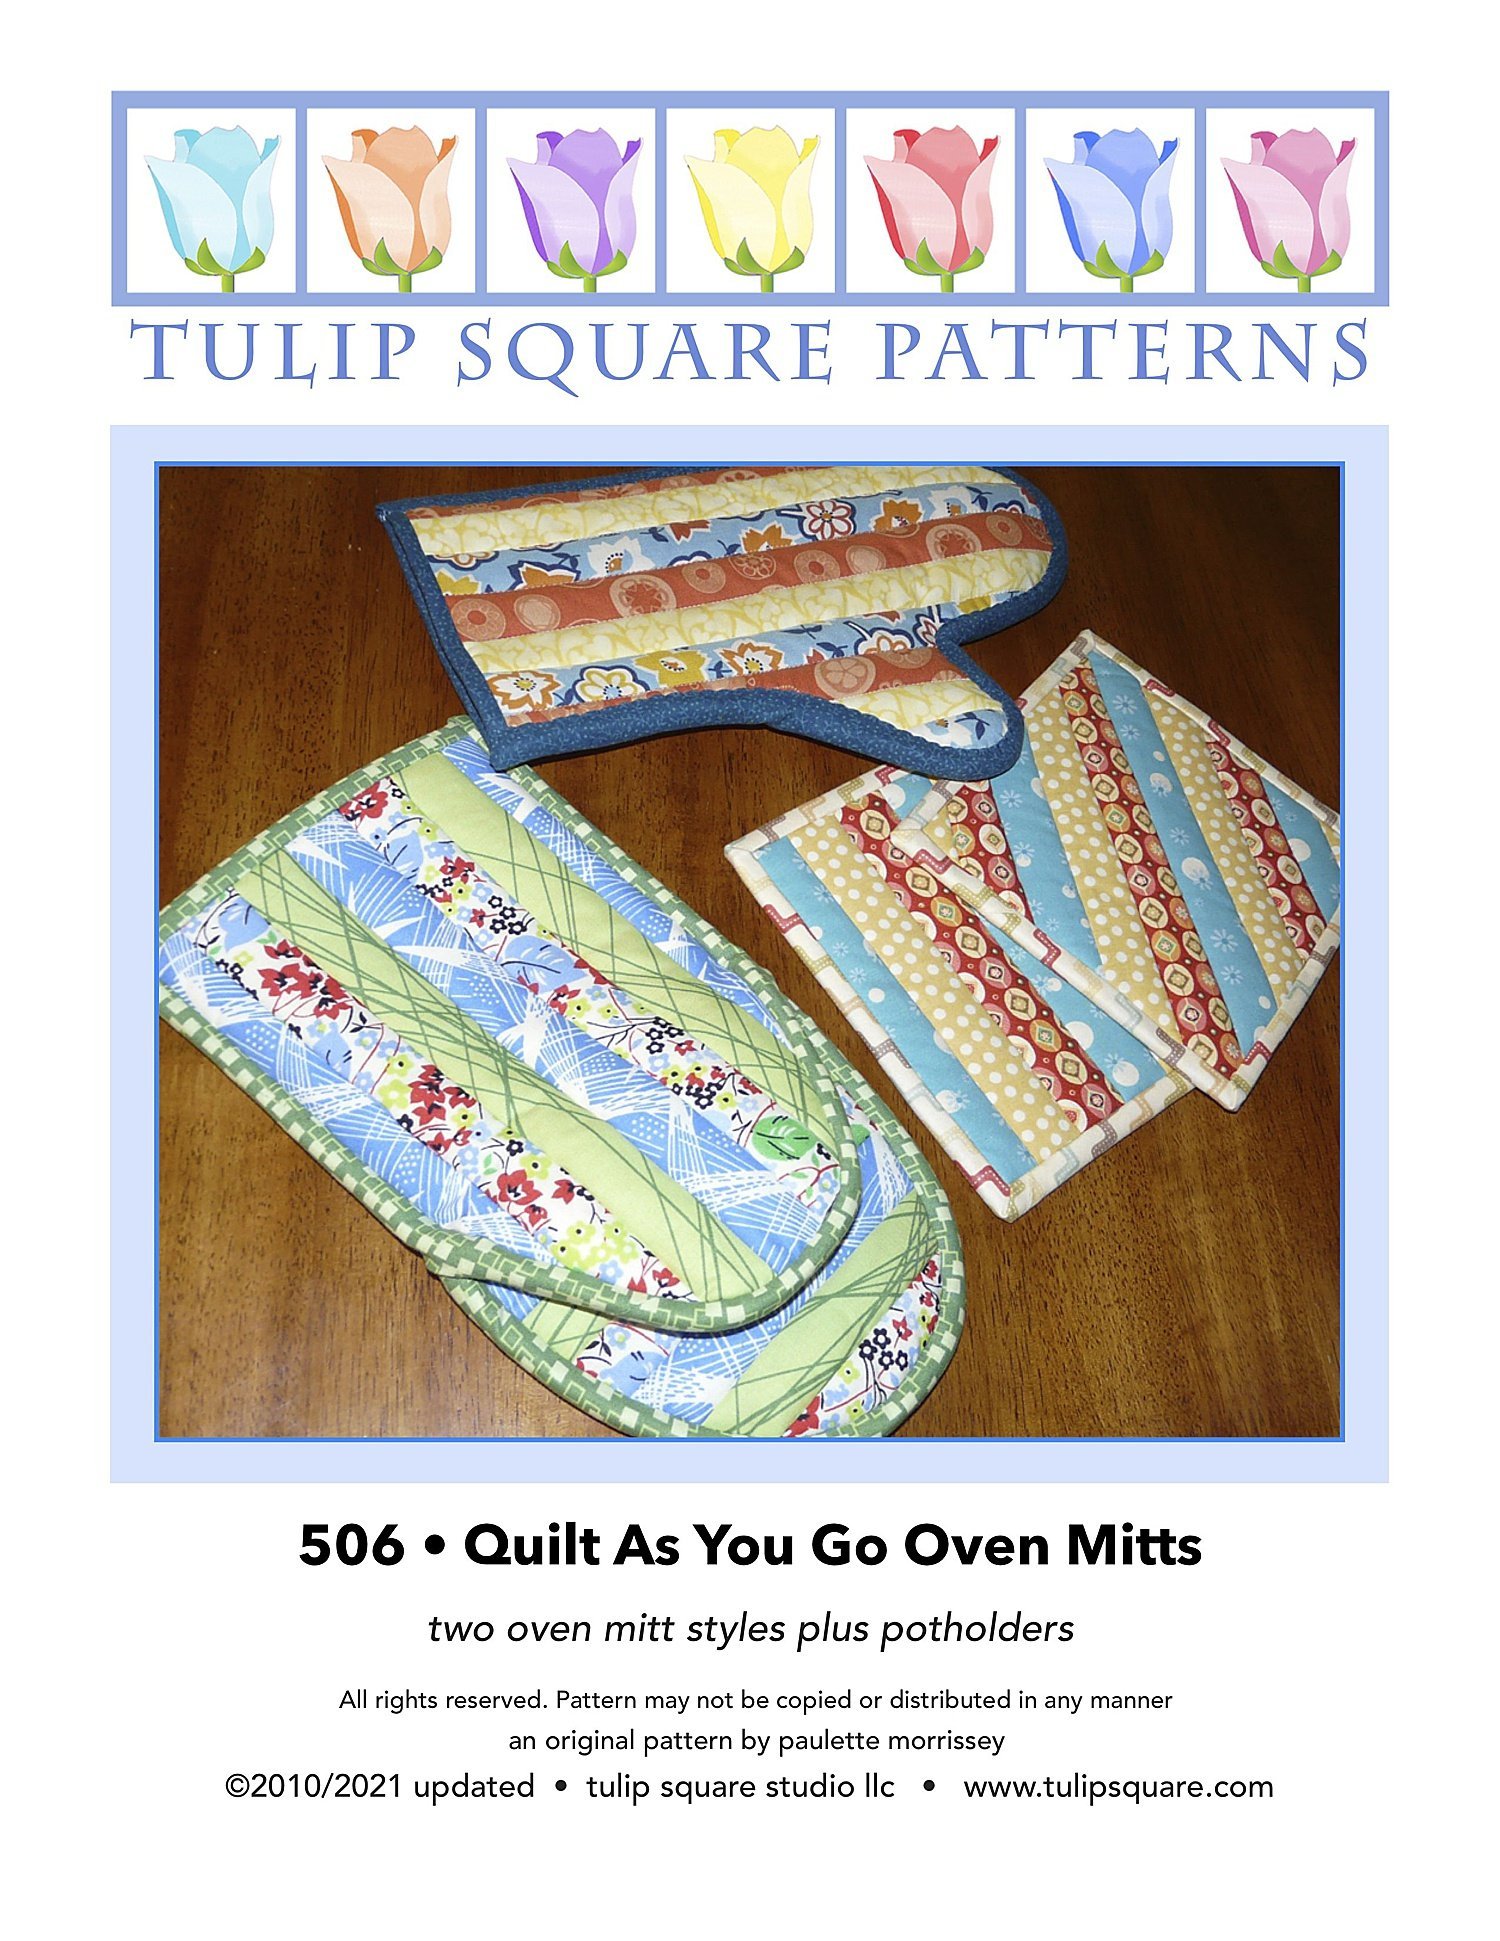 https://tulipsquare.com/wp-content/uploads/2021/06/506-oven-mitts_-tulip-square-quilt-patterns.jpg